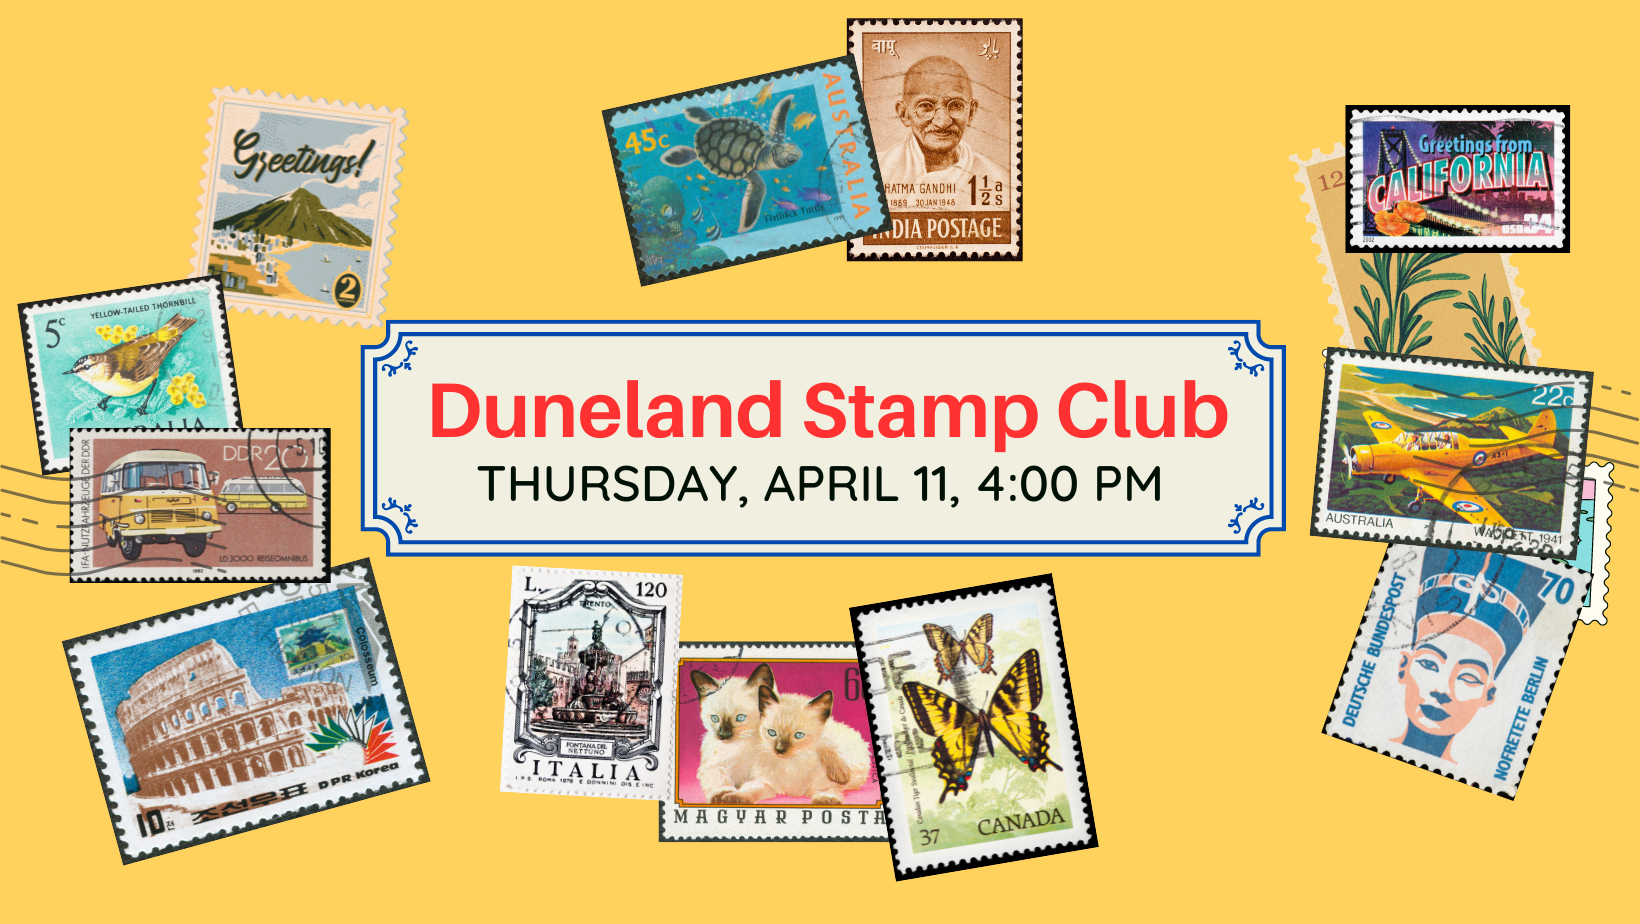 Duneland Stamp Club, Thursday, April 11 at 4:00 pm